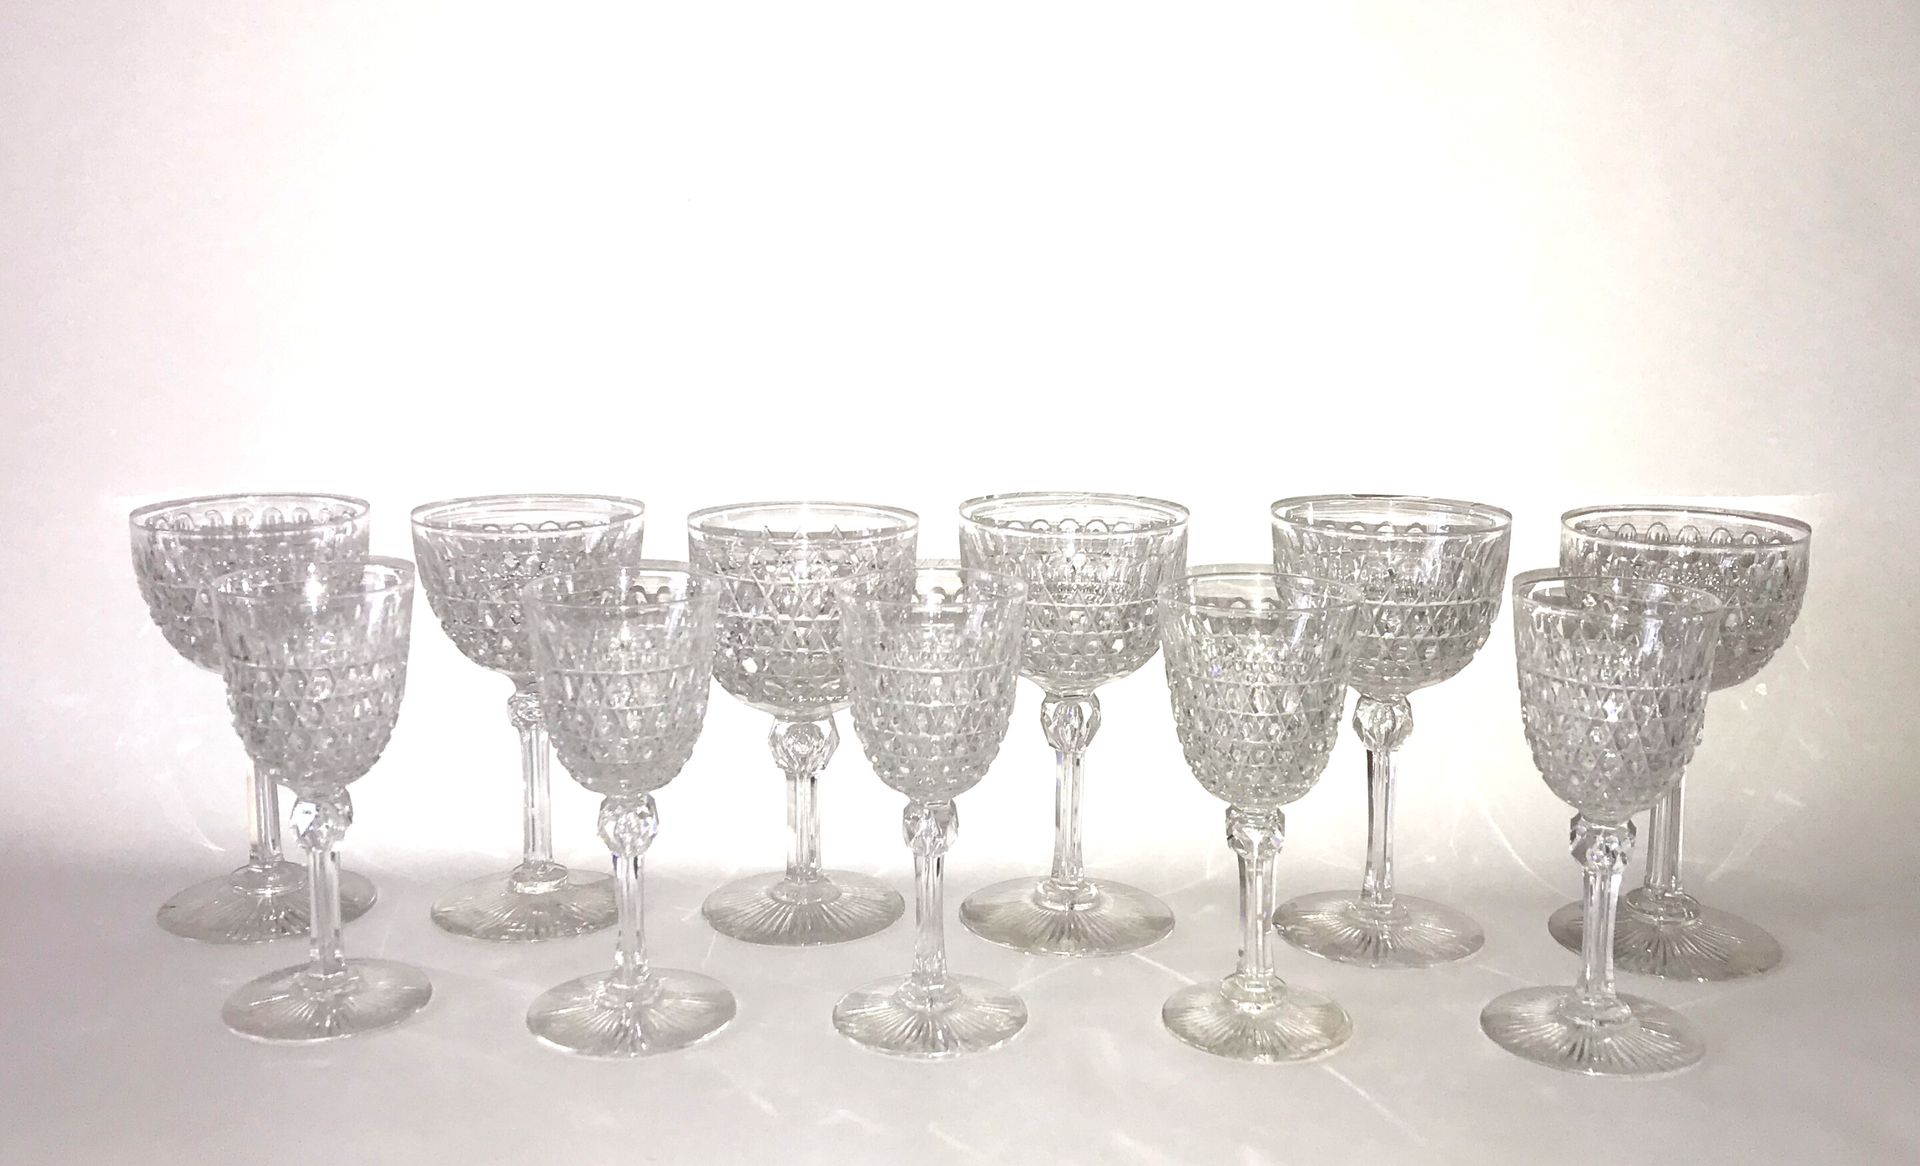 SAINT LOUIS 圣卢瓦（SAINT LOUIS）风格的制造商

套装的切割水晶杯包括：6只水杯，5只酒杯和3只香槟杯

小碎片